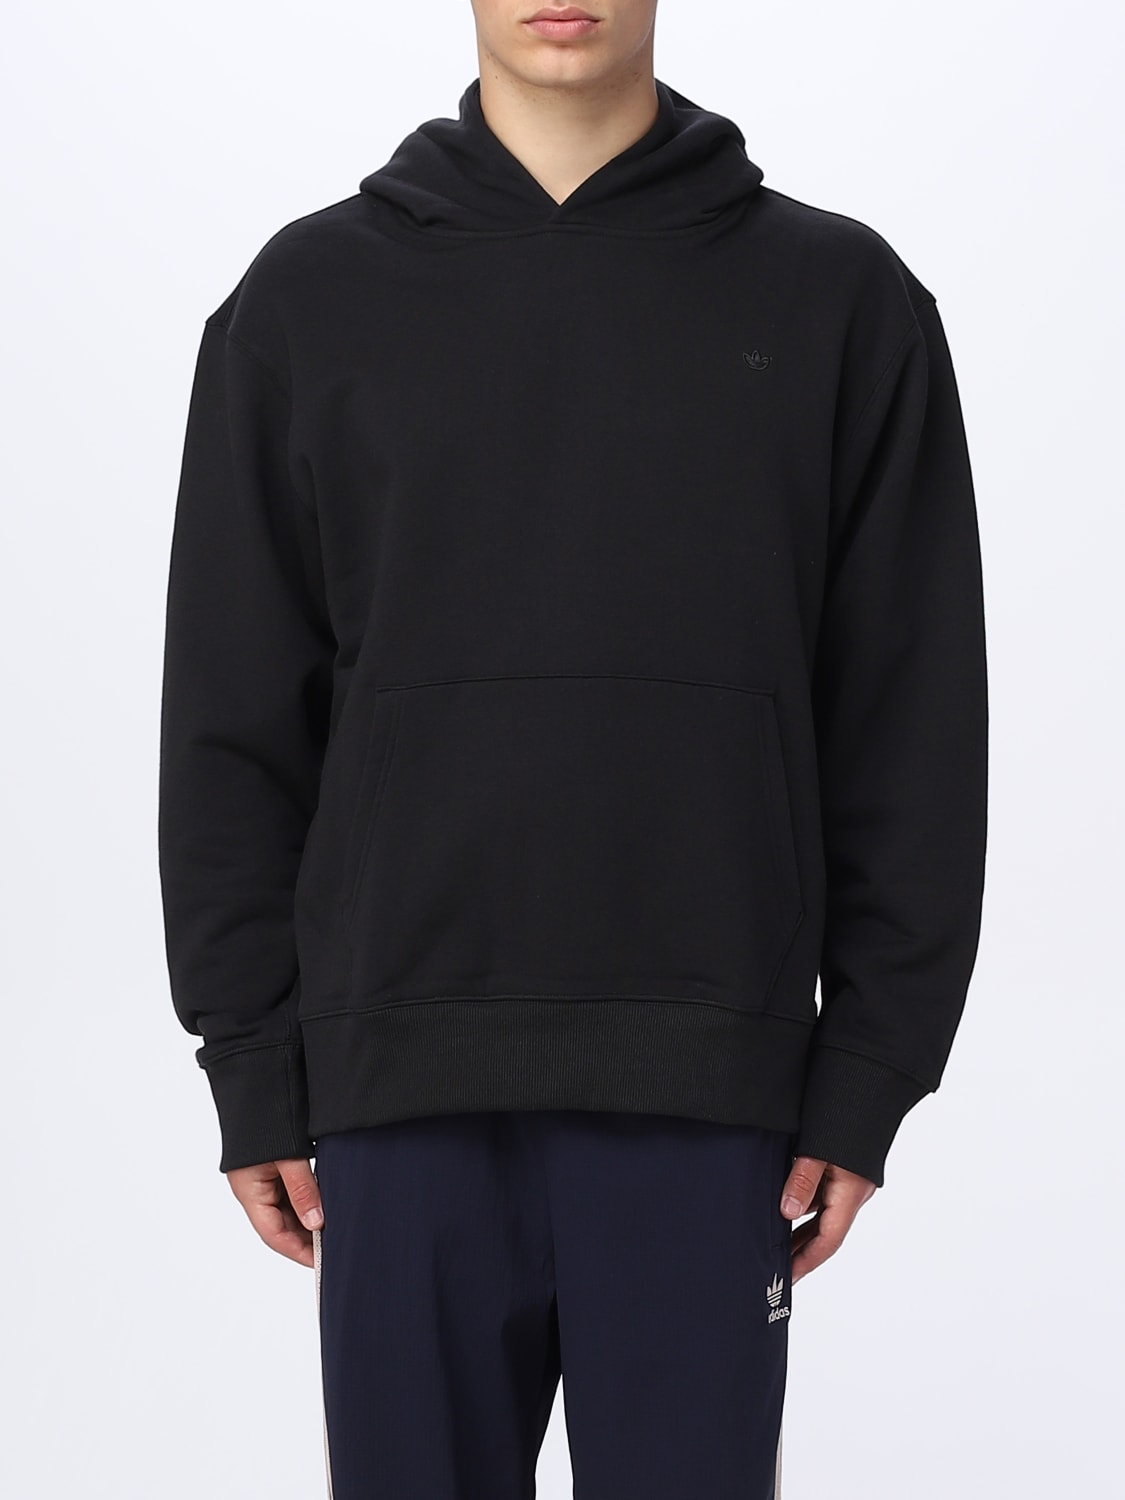 Black Originals in cotton online HK2937 ORIGINALS: ADIDAS sweatshirt sweatshirt | - at Adidas